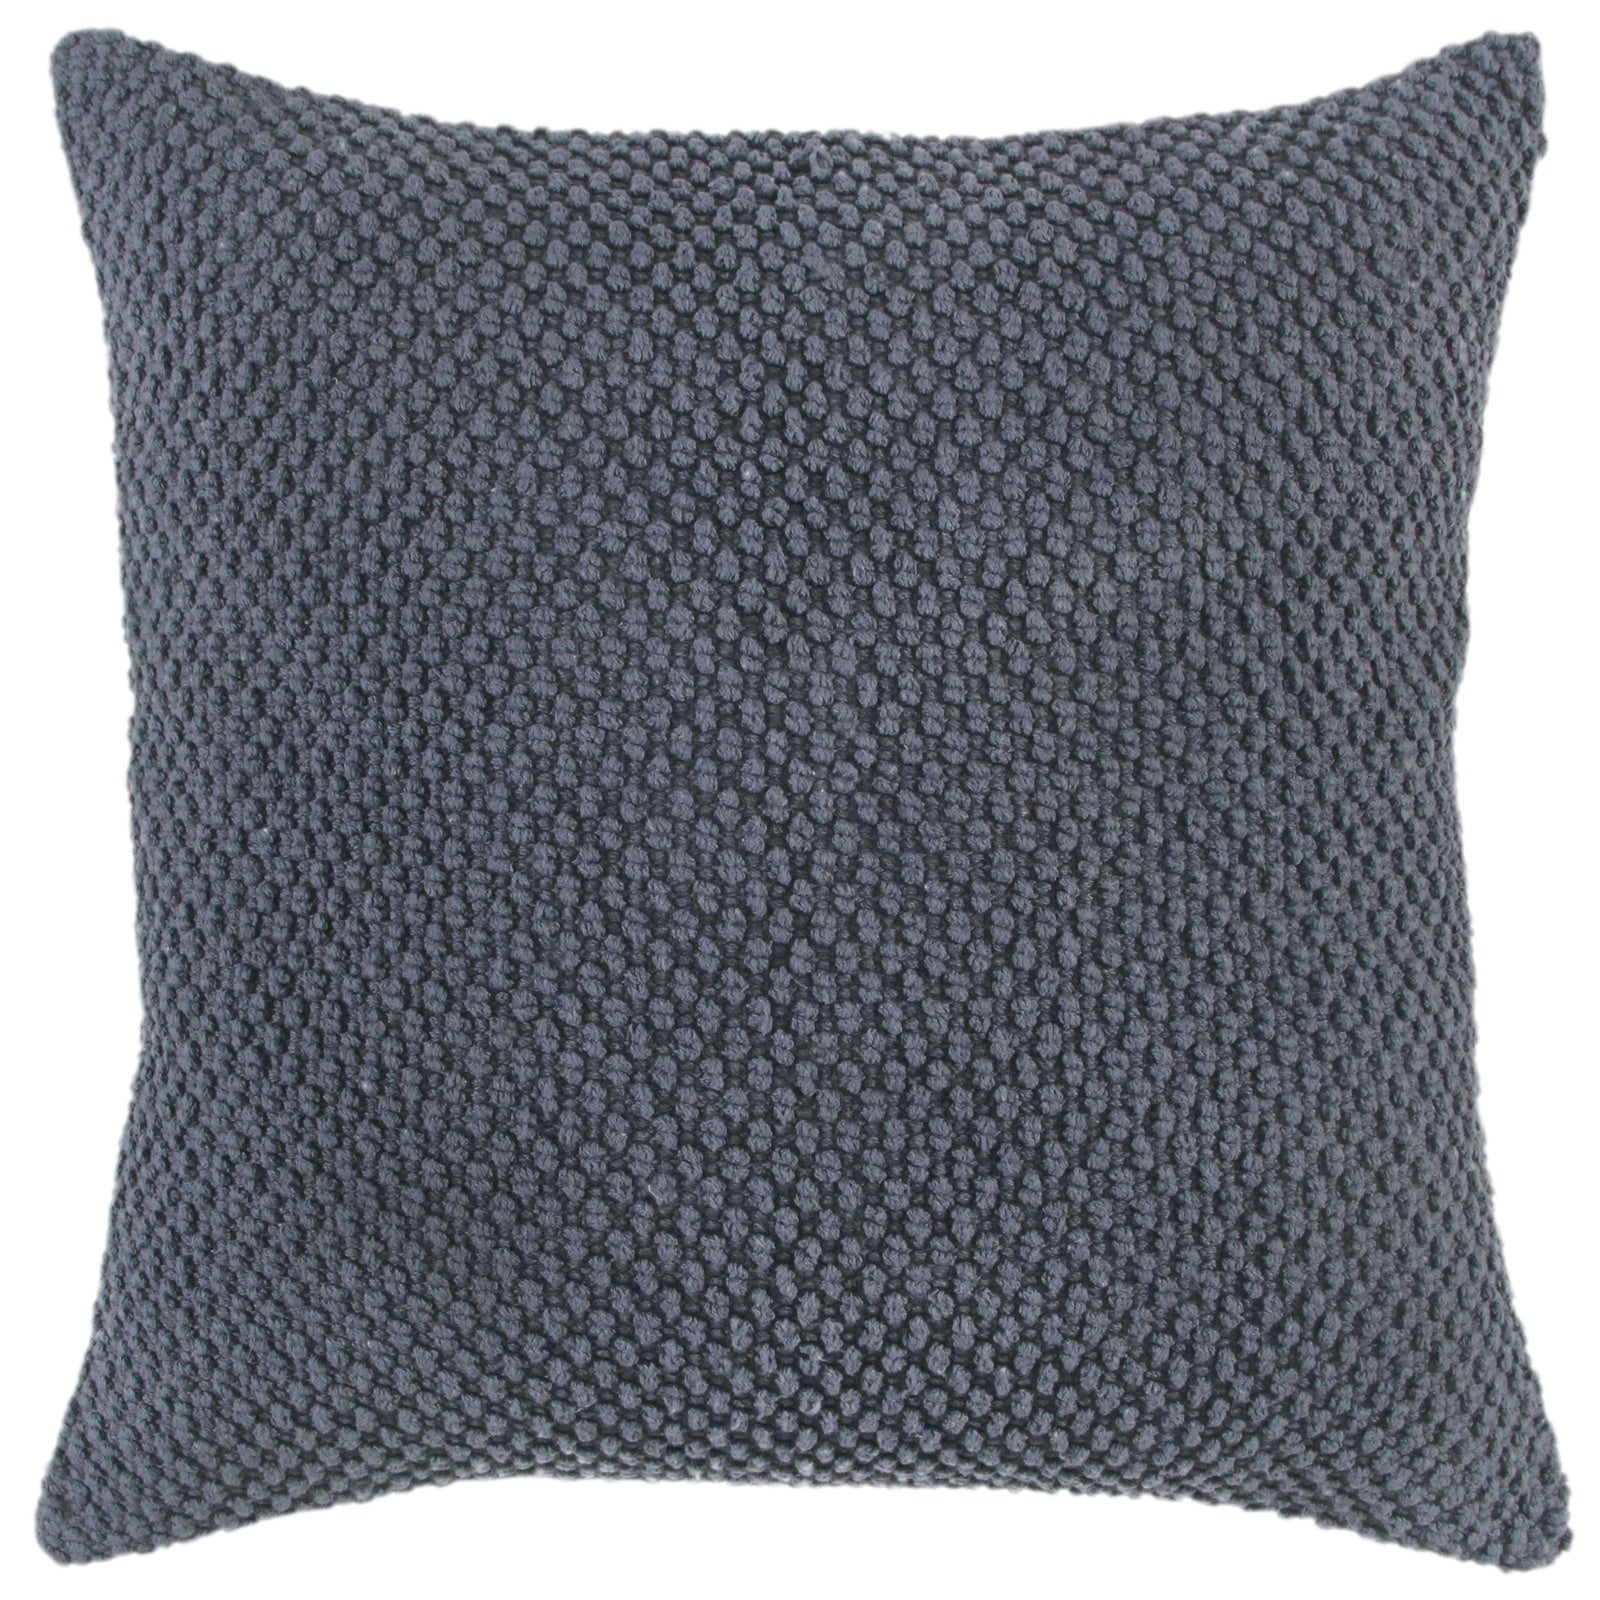 Woven Cotton Solid Decorative Throw Pillow - Decorative Pillows